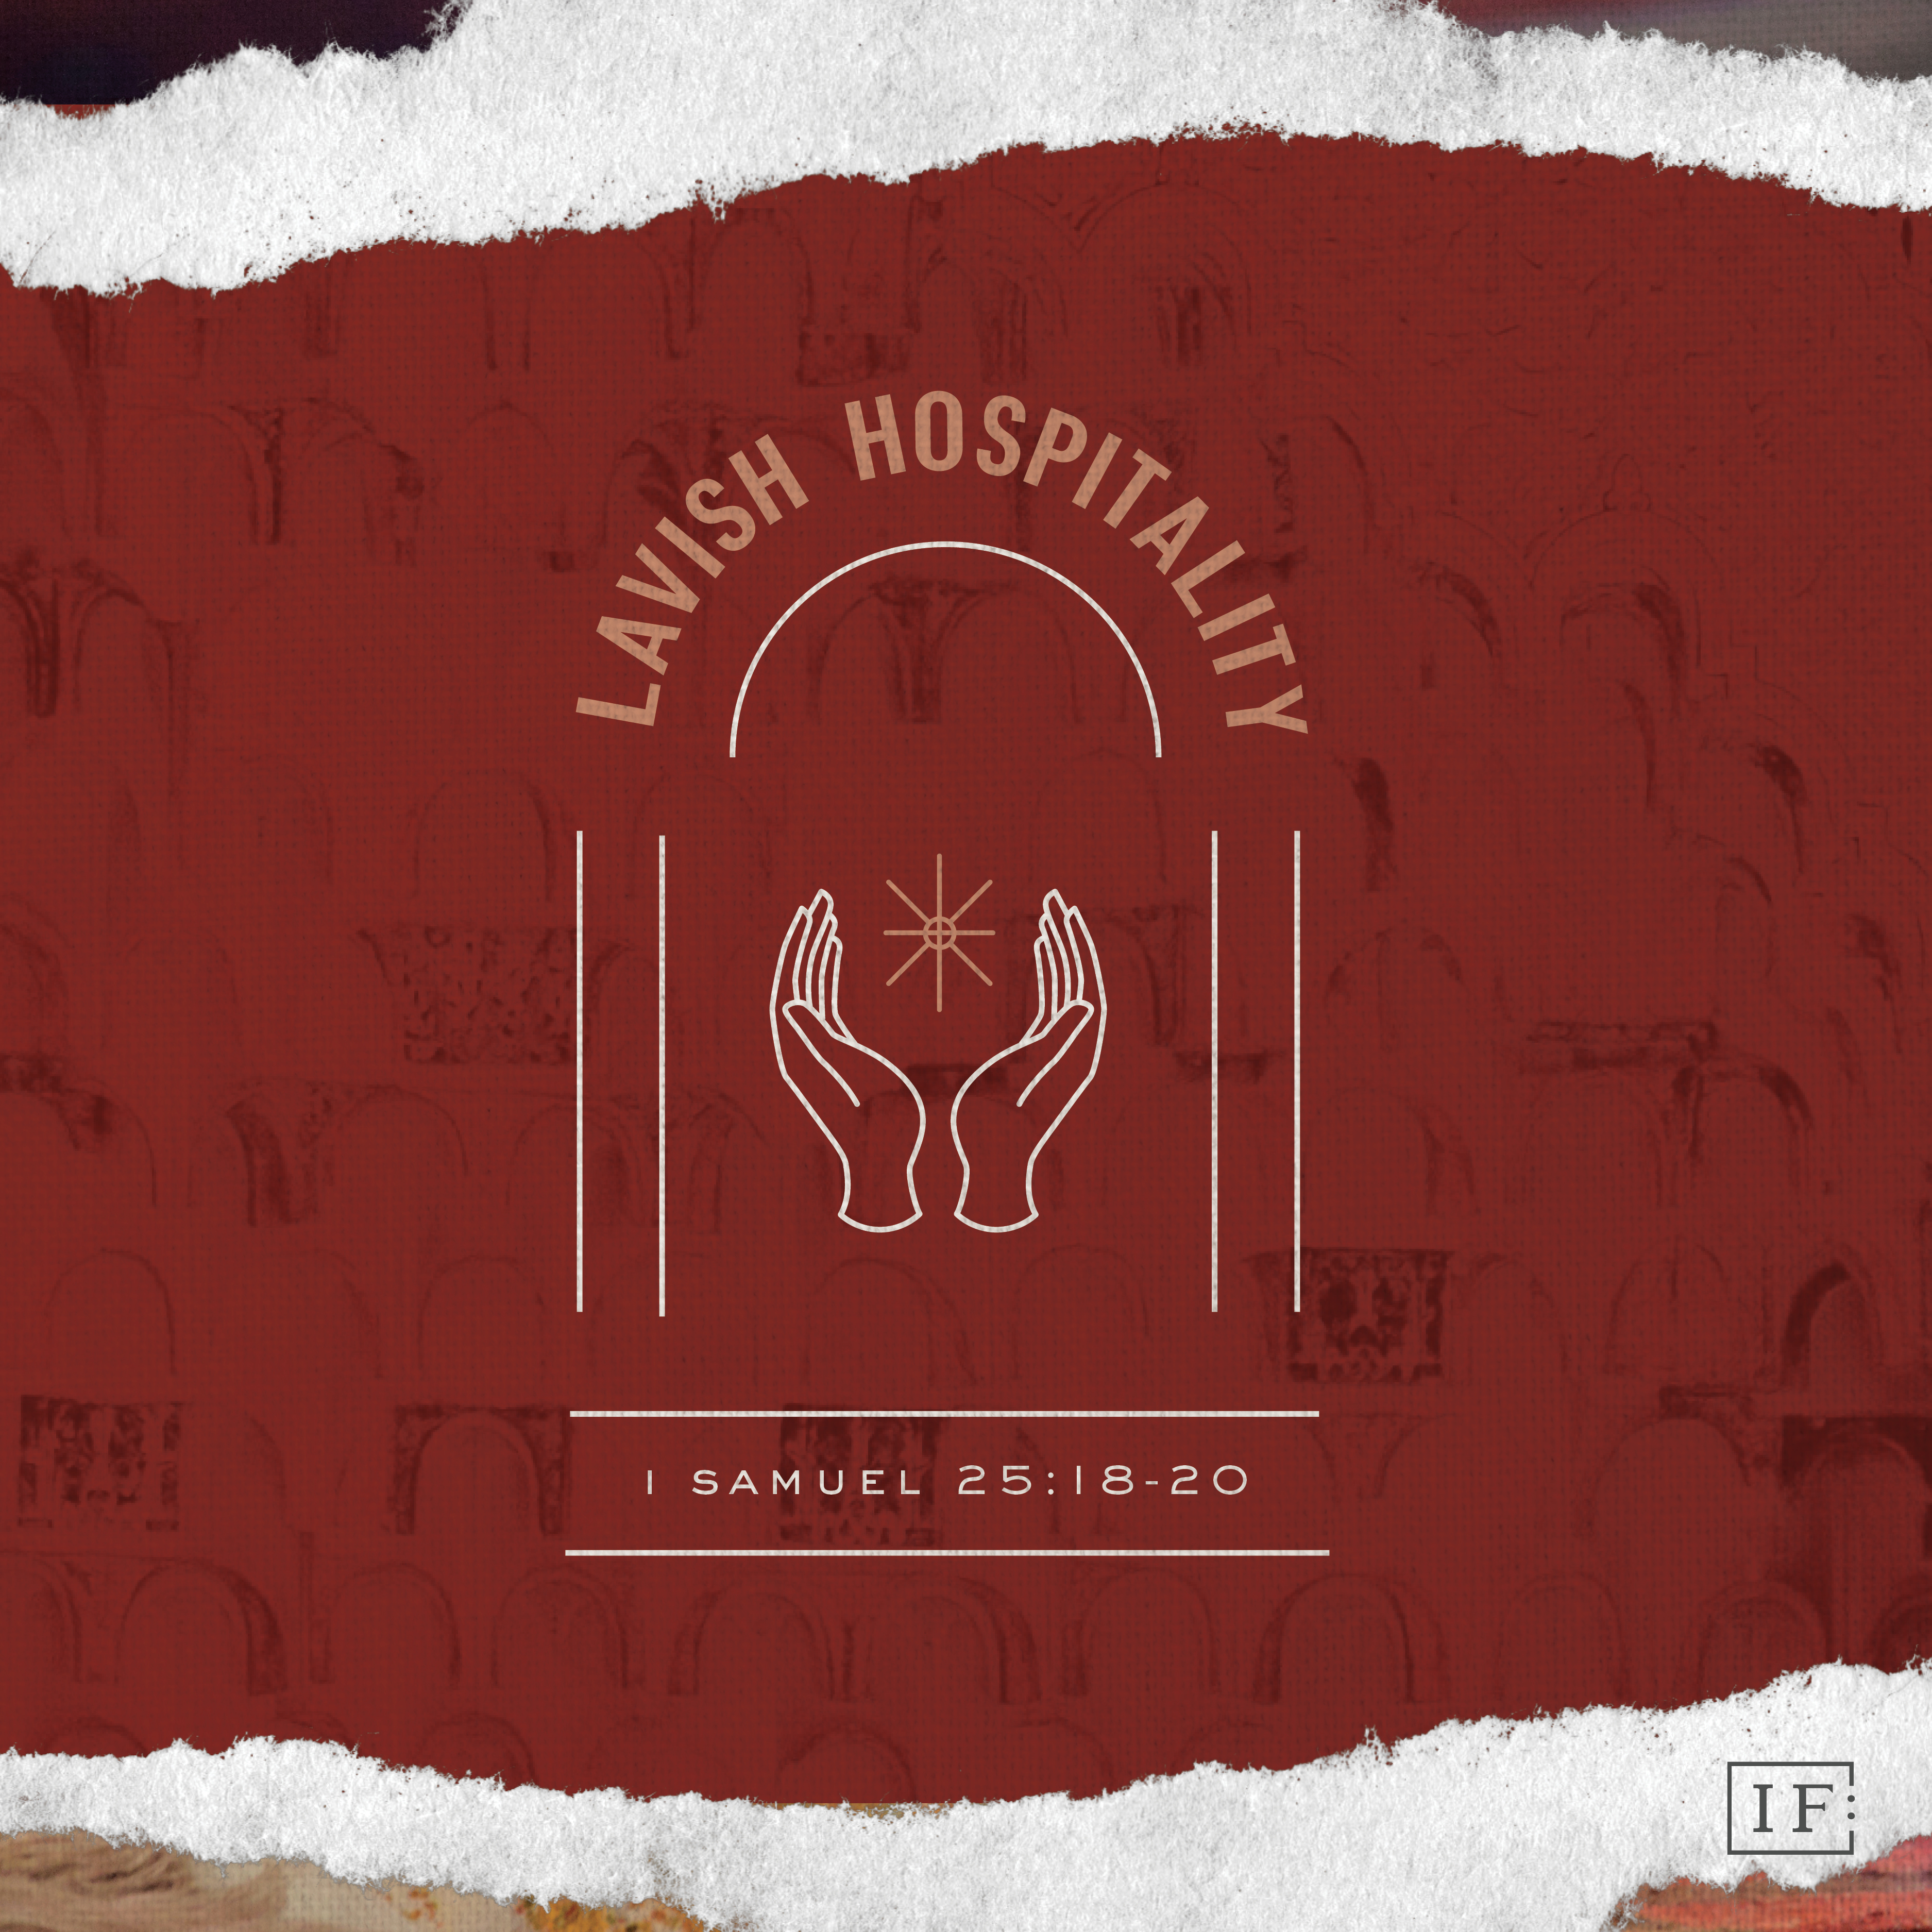 Lavish Hospitality Book Cover